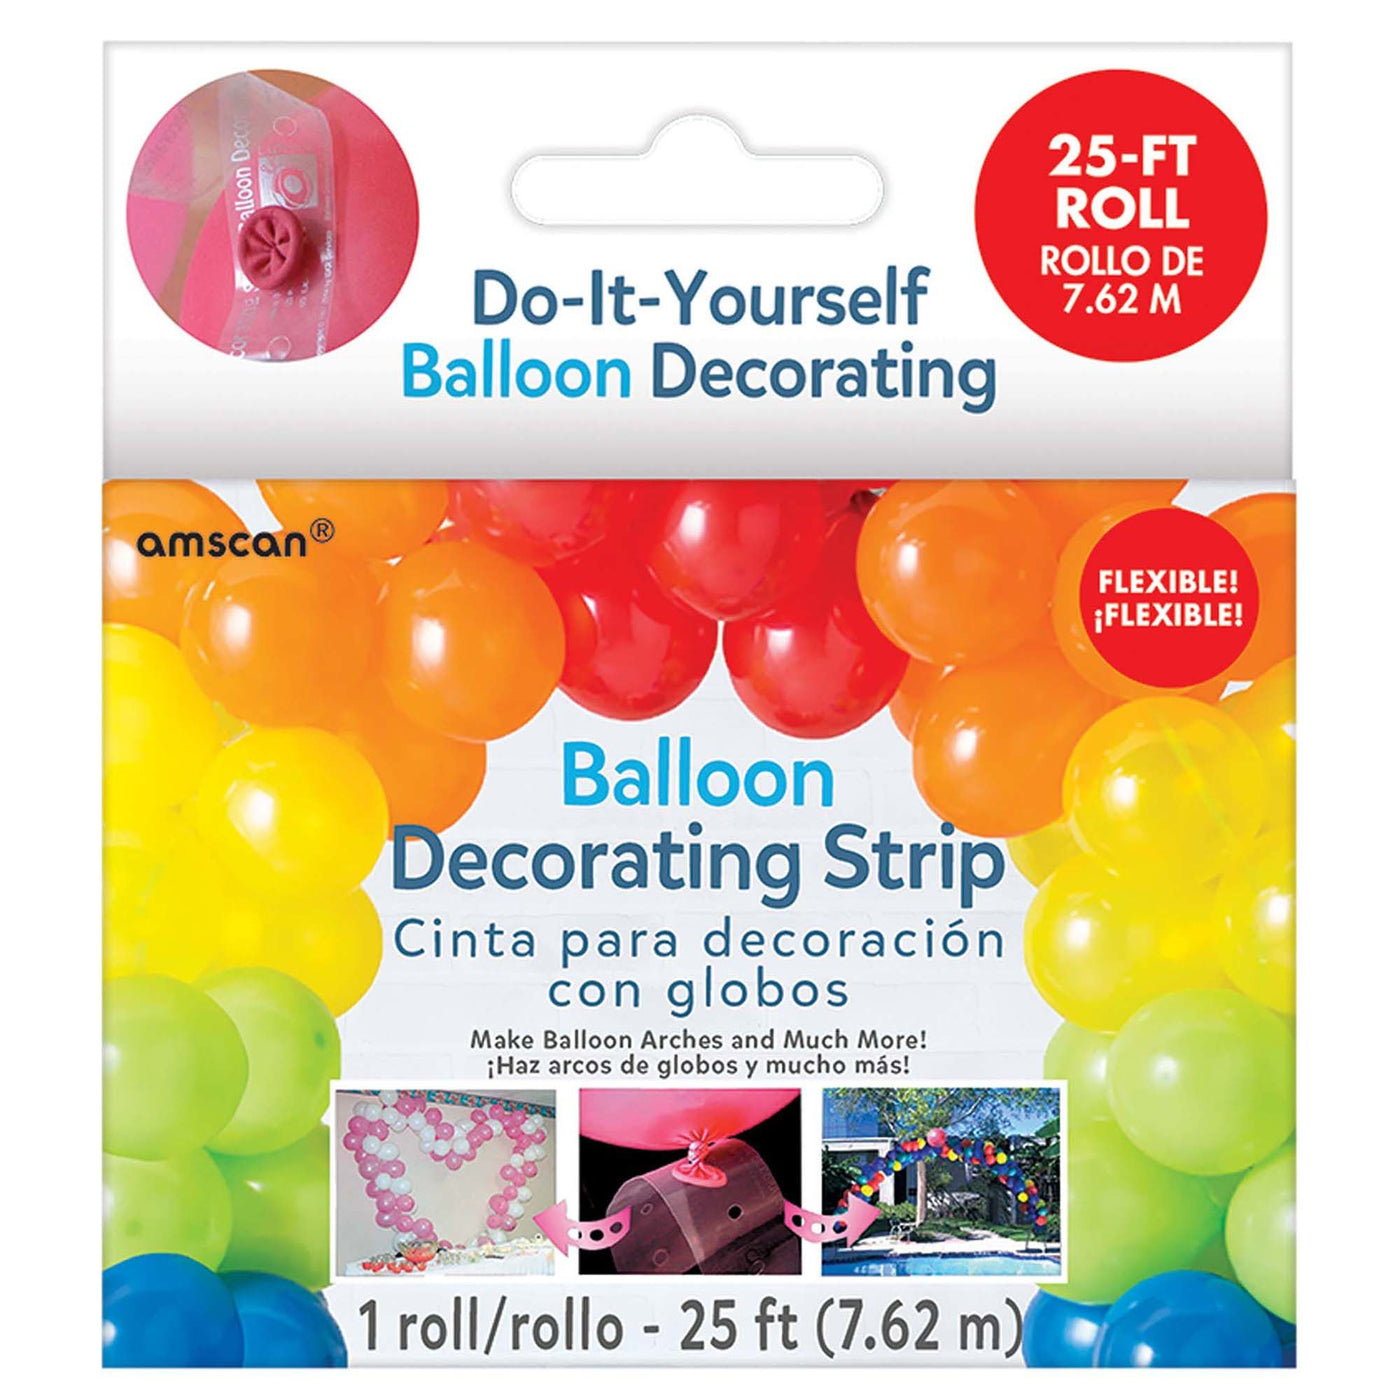 Balloon Decorating Strip